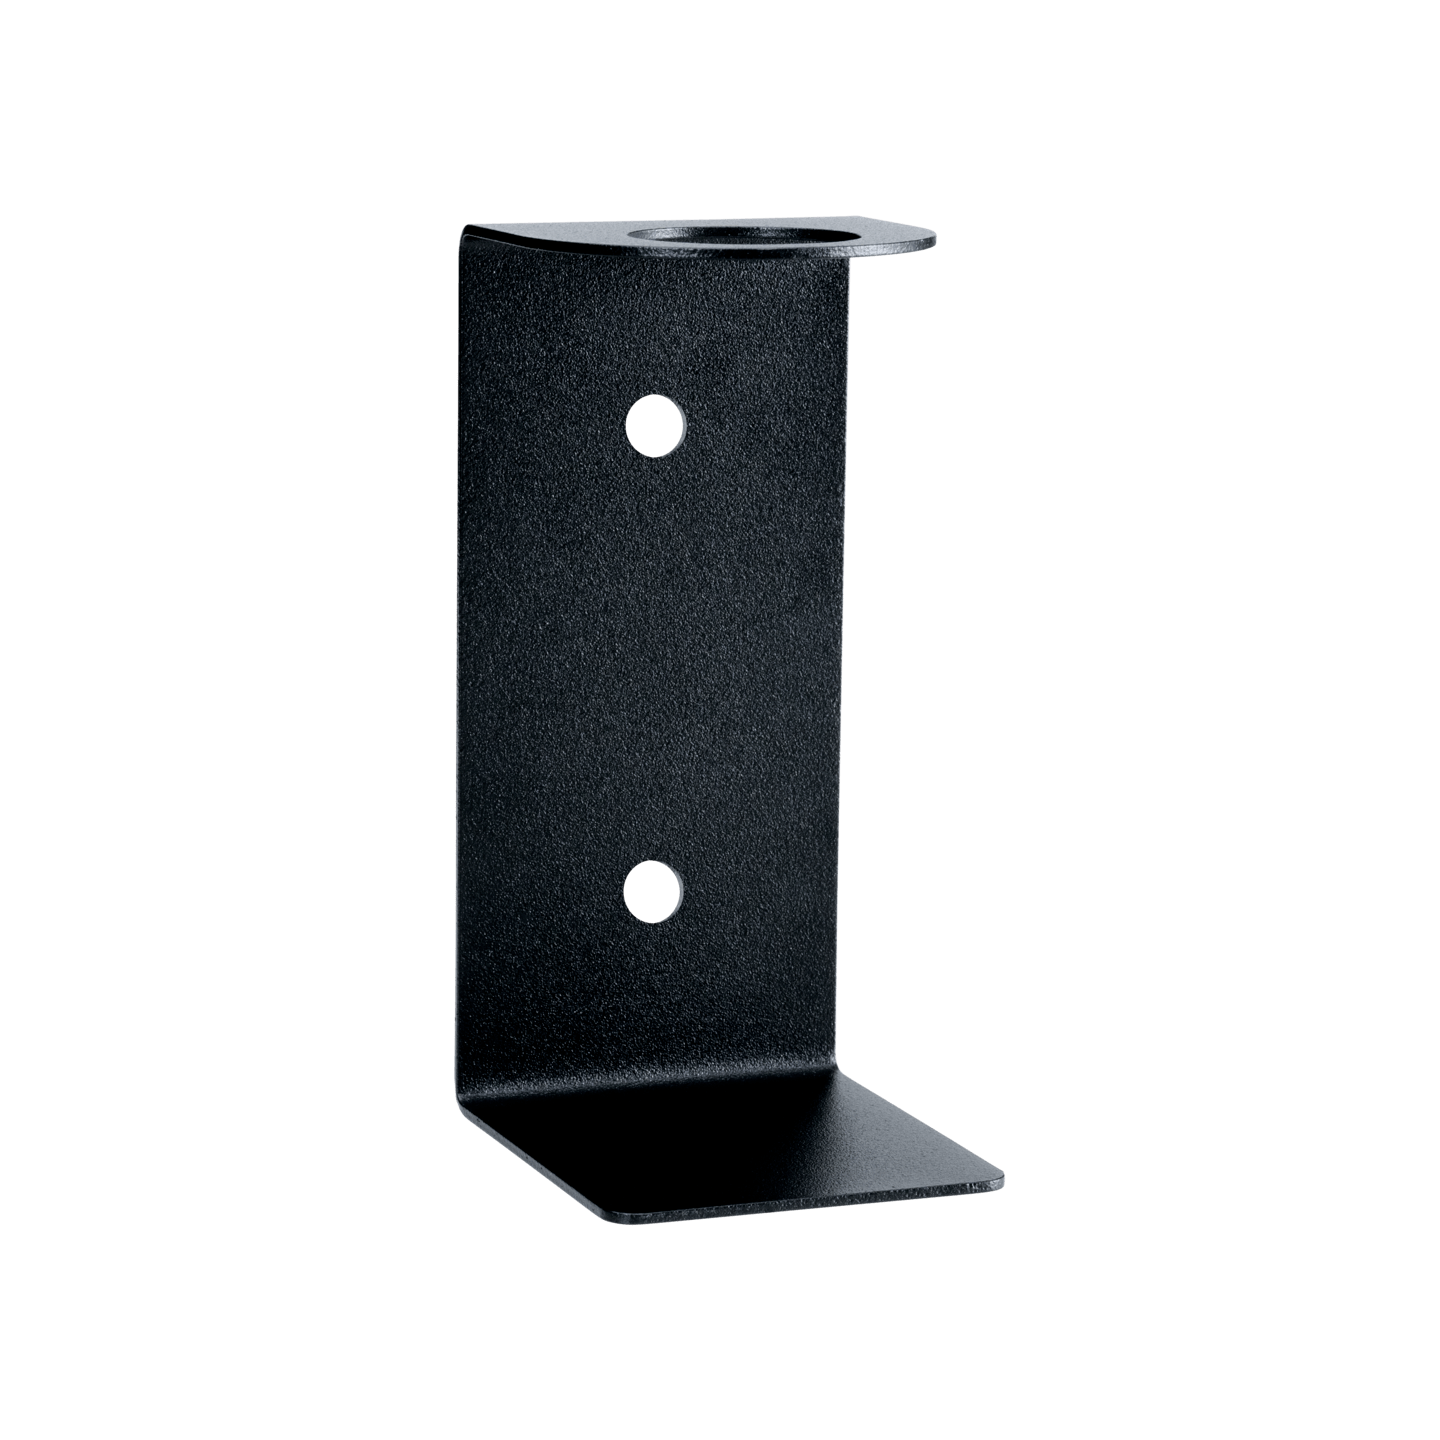 RUCK - Seifenspenderhalter, schwarz-matt, Metall, 6 x 13 x 6,5 cm in schwarz